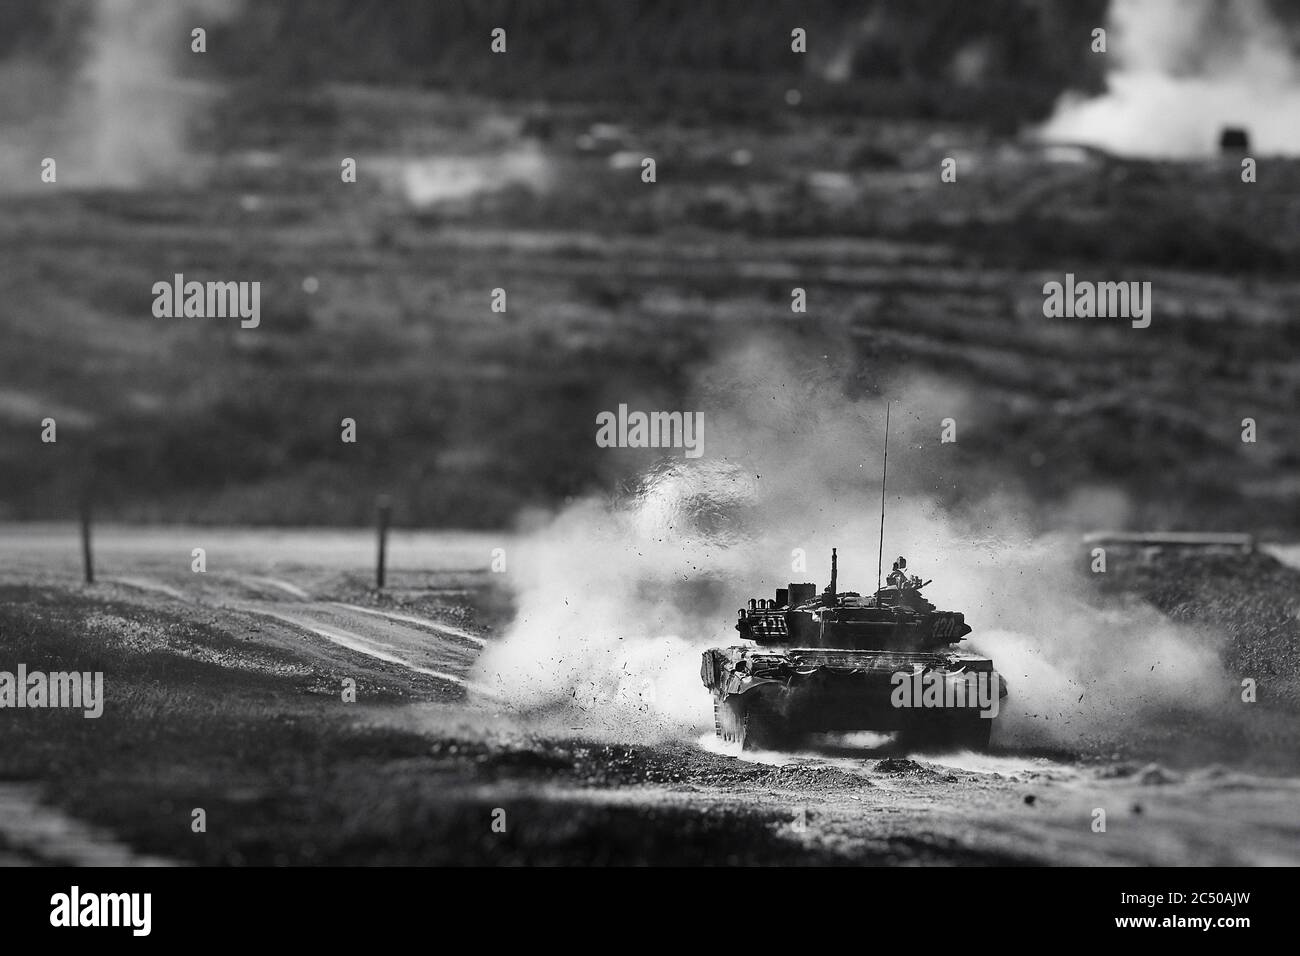 Shot from a tank. Russian tank shot on range. Smoke, explosions